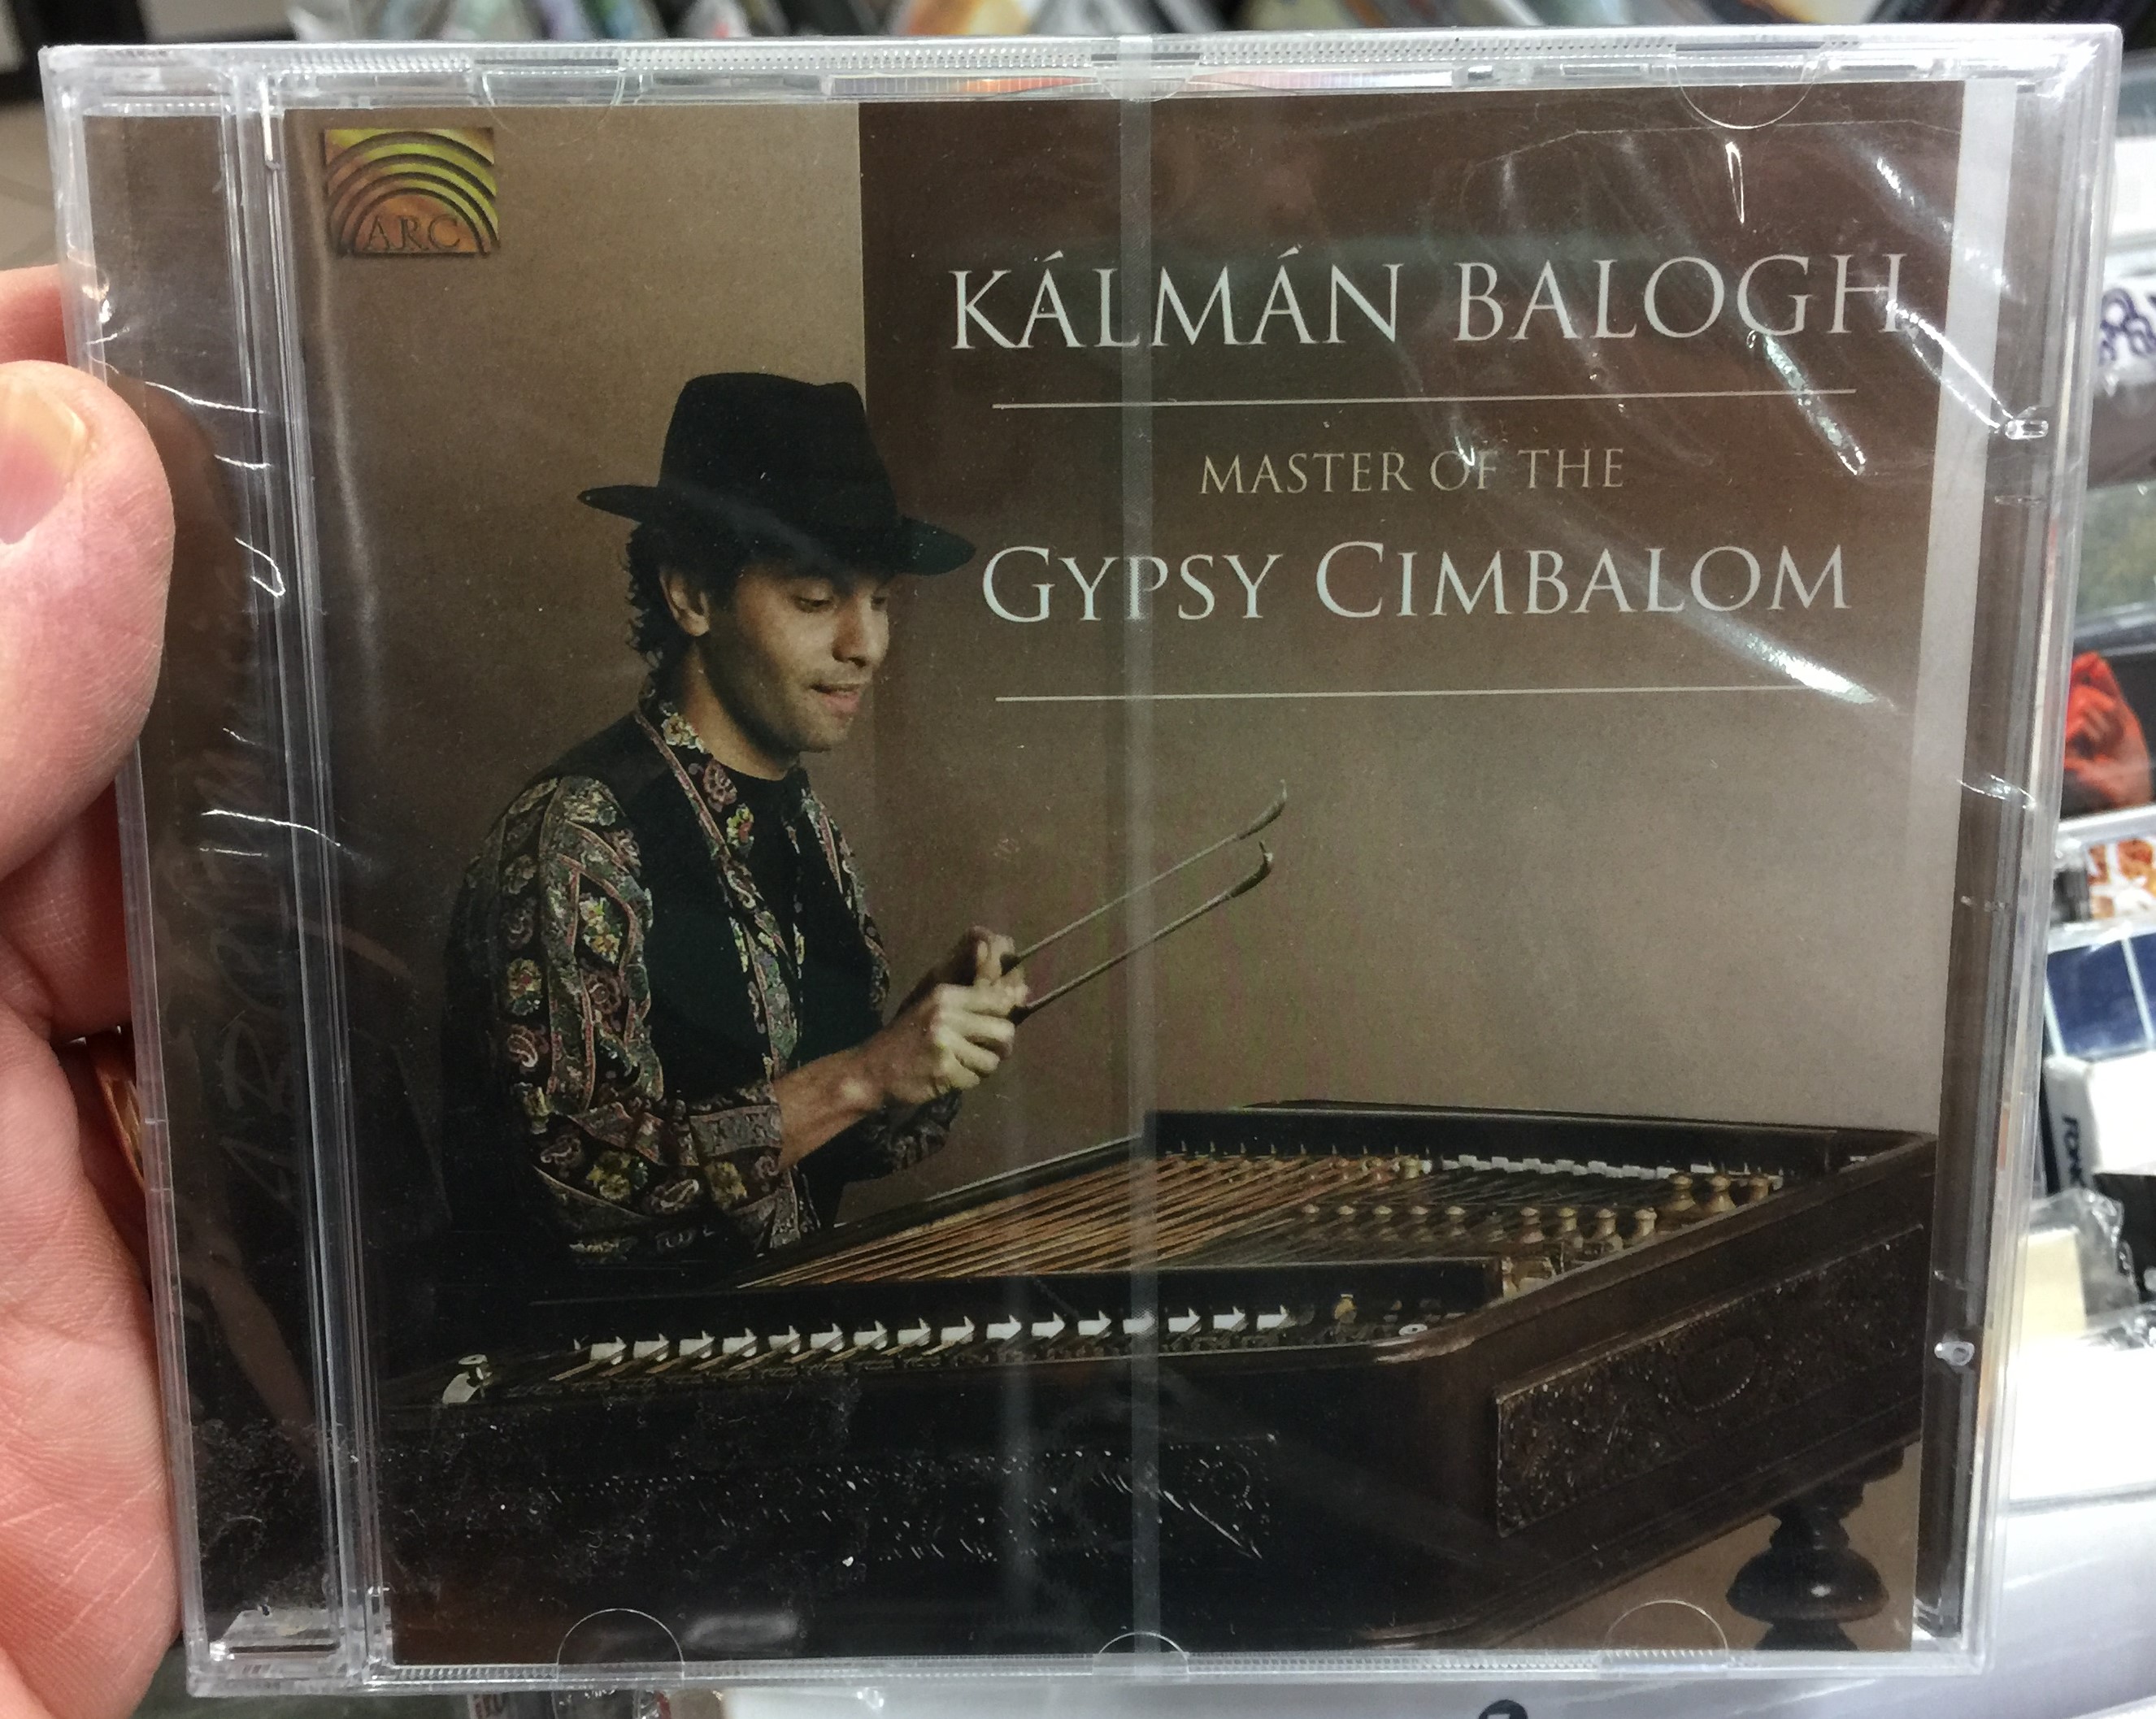 k-lm-n-balogh-master-of-the-gypsy-cimbalom-arc-music-audio-cd-2008-eucd-2172-1-.jpg